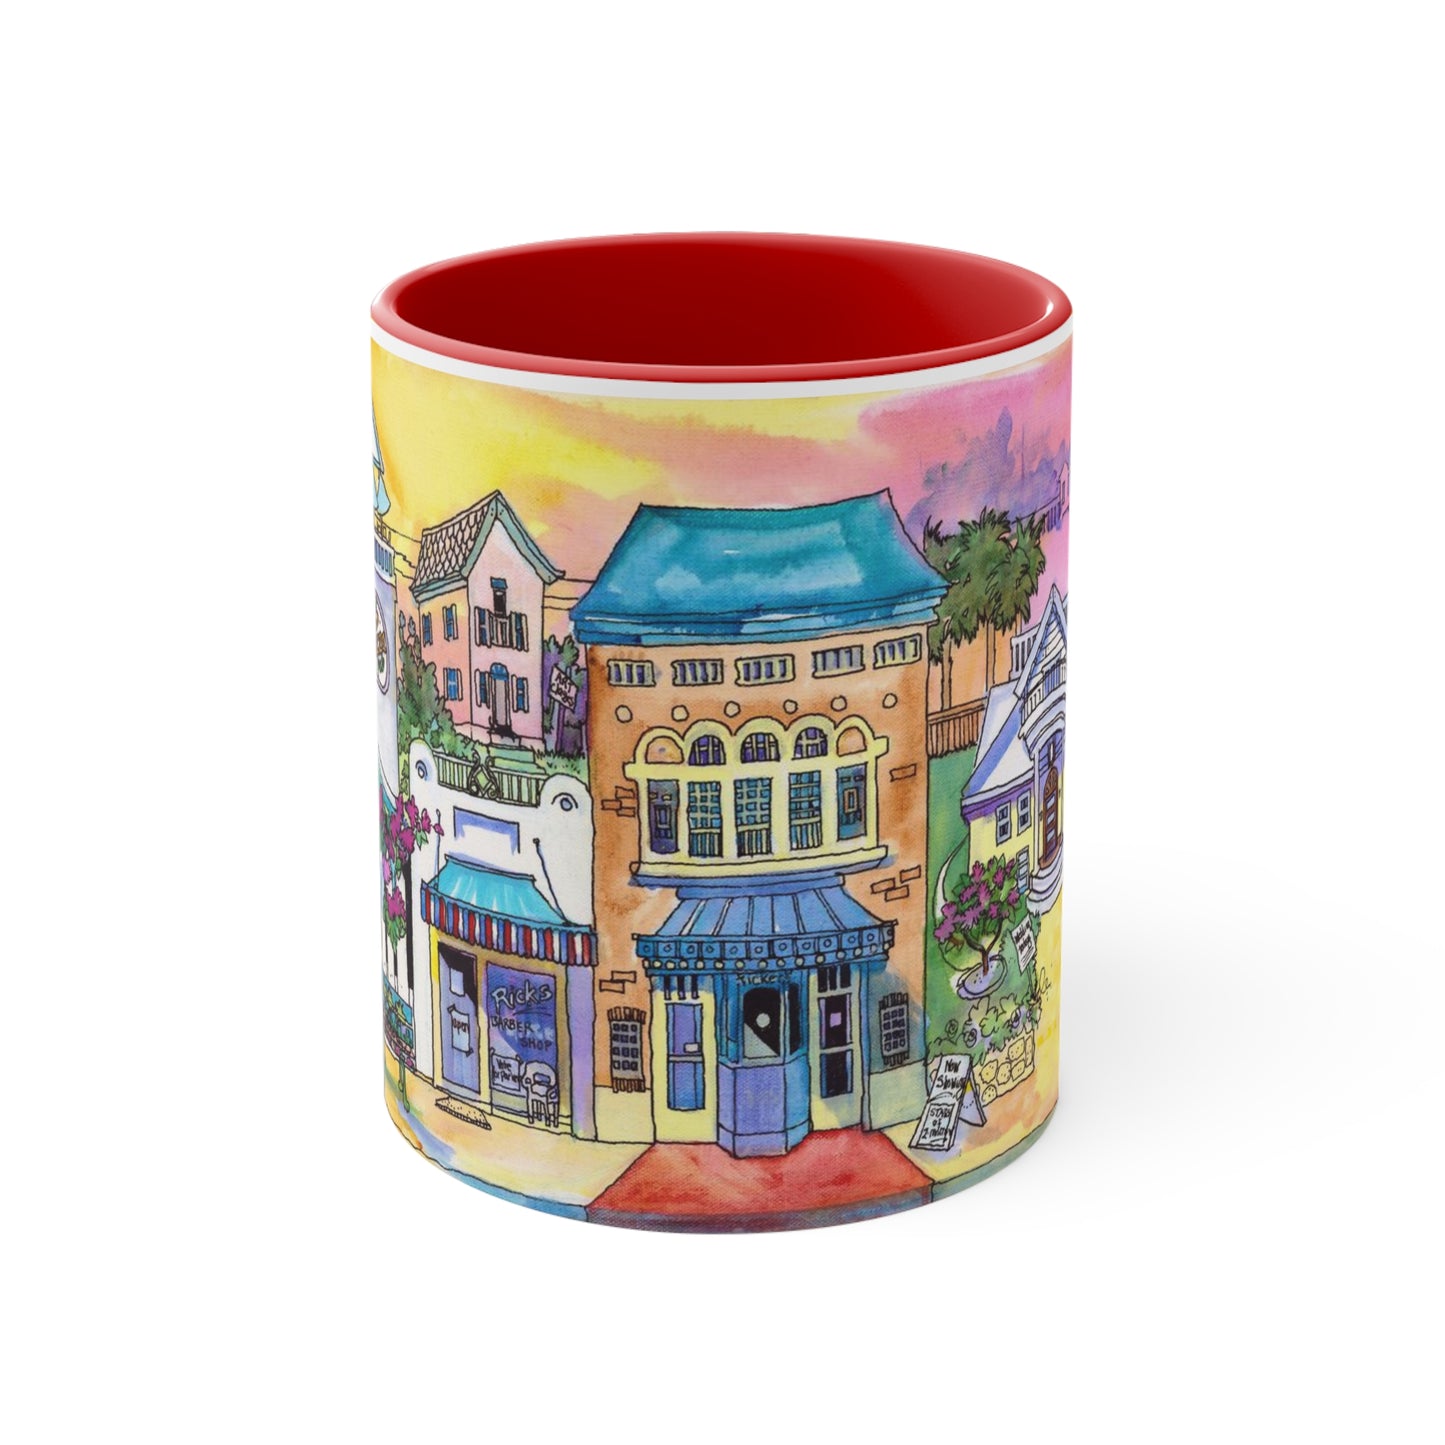 Cocoa Village Sunset Accent Coffee Mug, 11oz